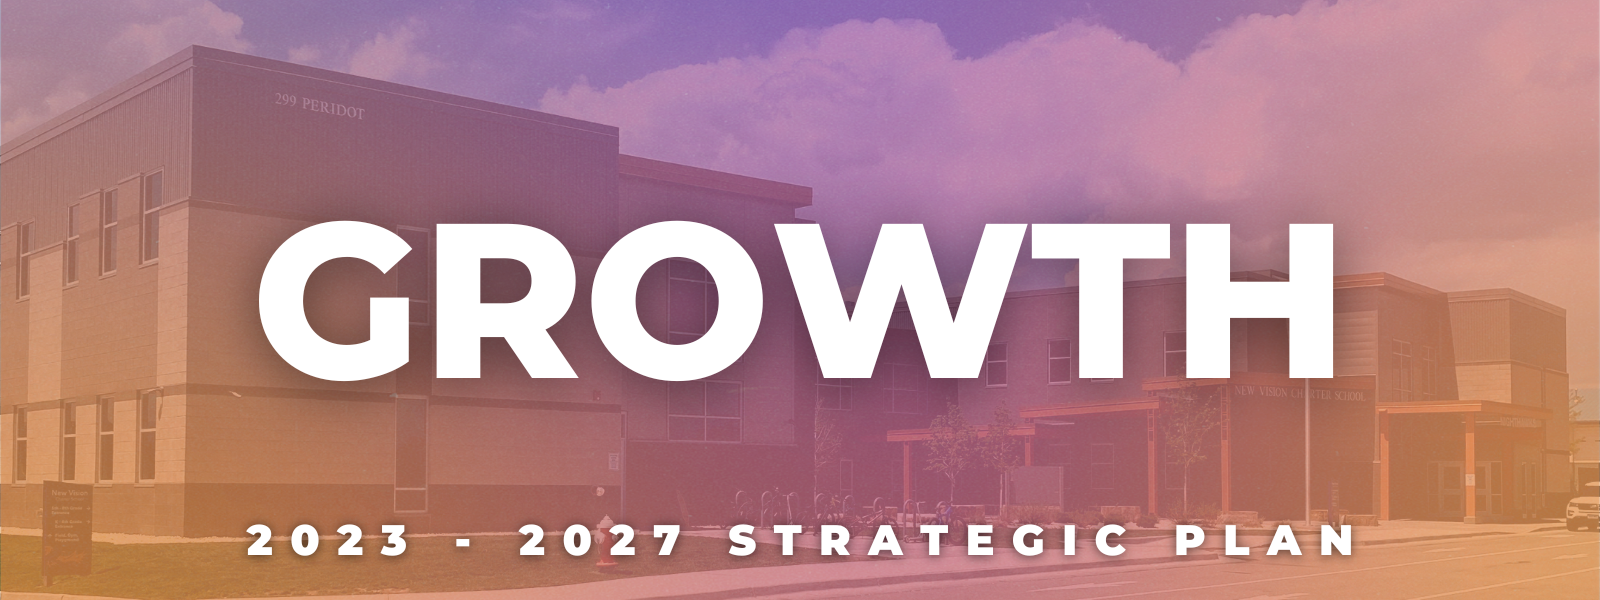 GROWTH: 2023 - 2027 STRATEGIC PLAN